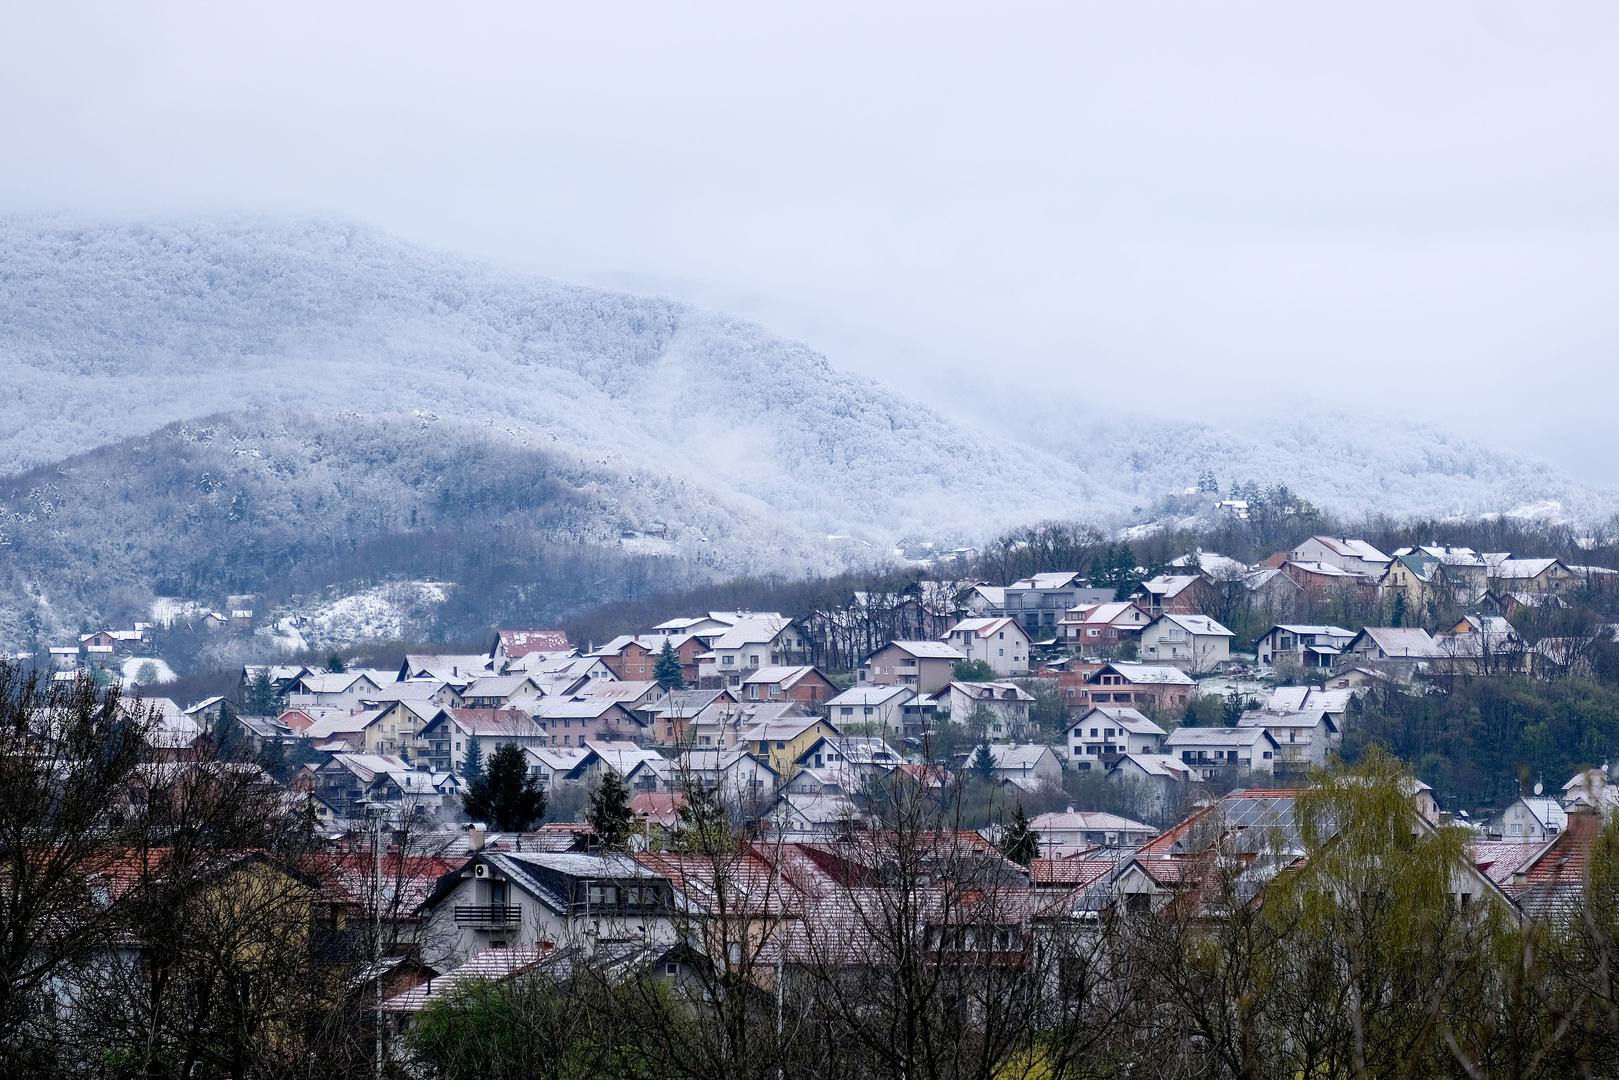 Nakon jučerašnjih proljetnih 20-ak stupnjeva, jutros posve drugačija slika. Hladno s kišom, a u Zagrebu je čak, na blagdan Cvjetnice, pao i snijeg.